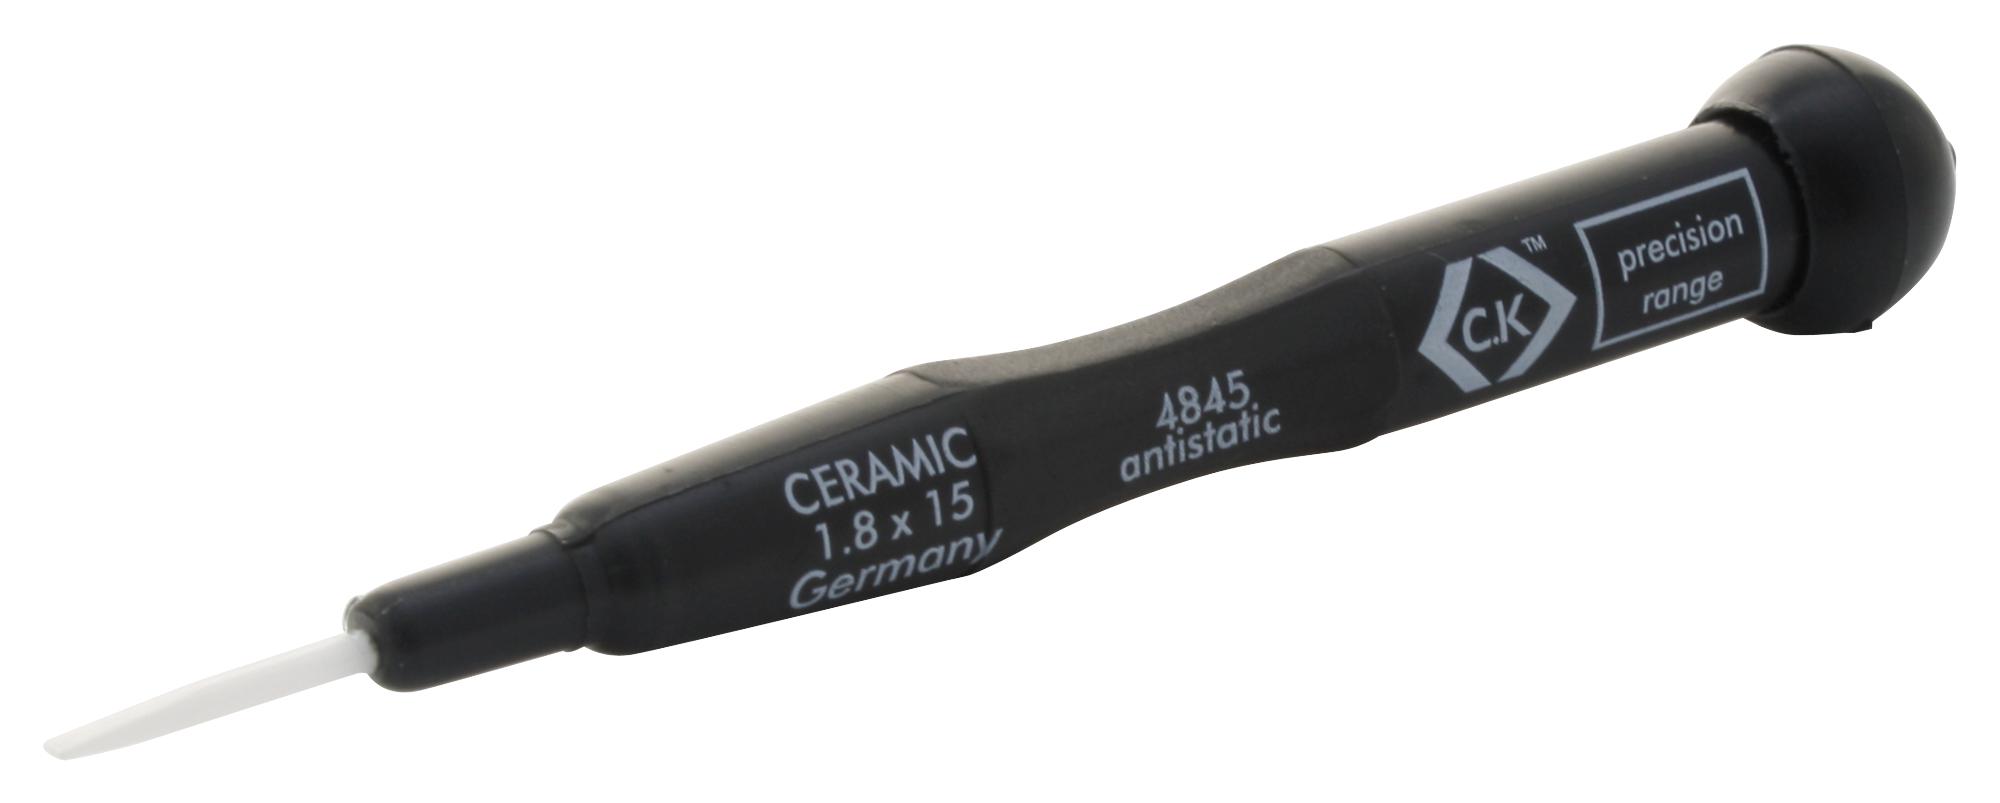 Ck Tools T4845 18 Precision Ceramic Trimmer Sl 1.8X15mm